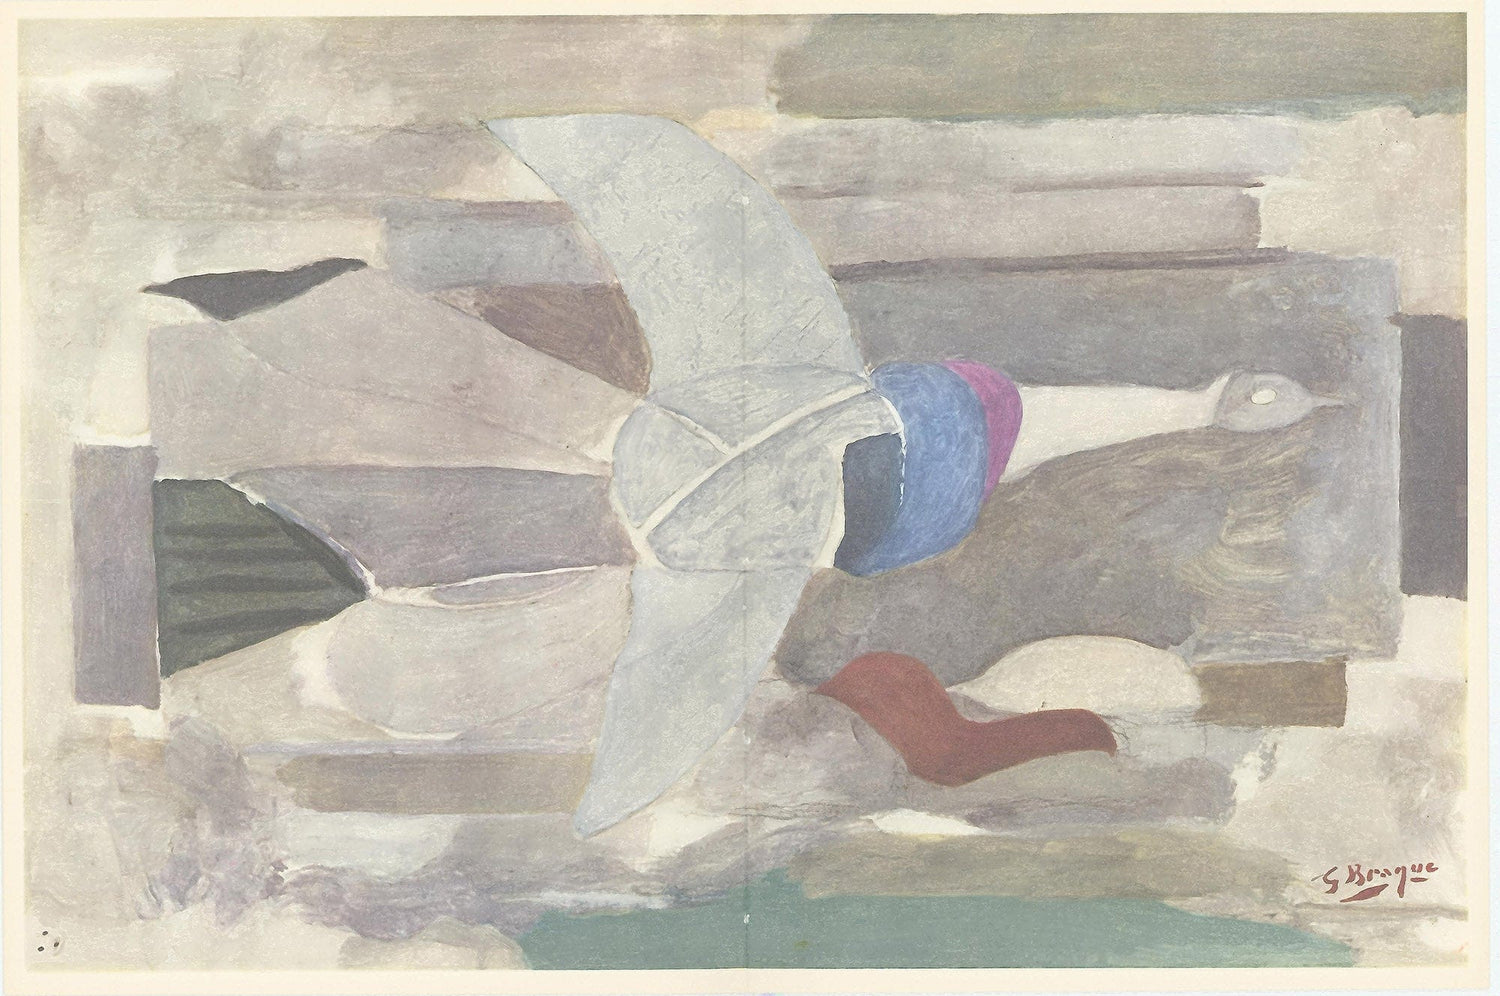 Georges Braque, "Untitled XVII" ZOOM Vol. 8 No. 31 ET 32 lithograph verve